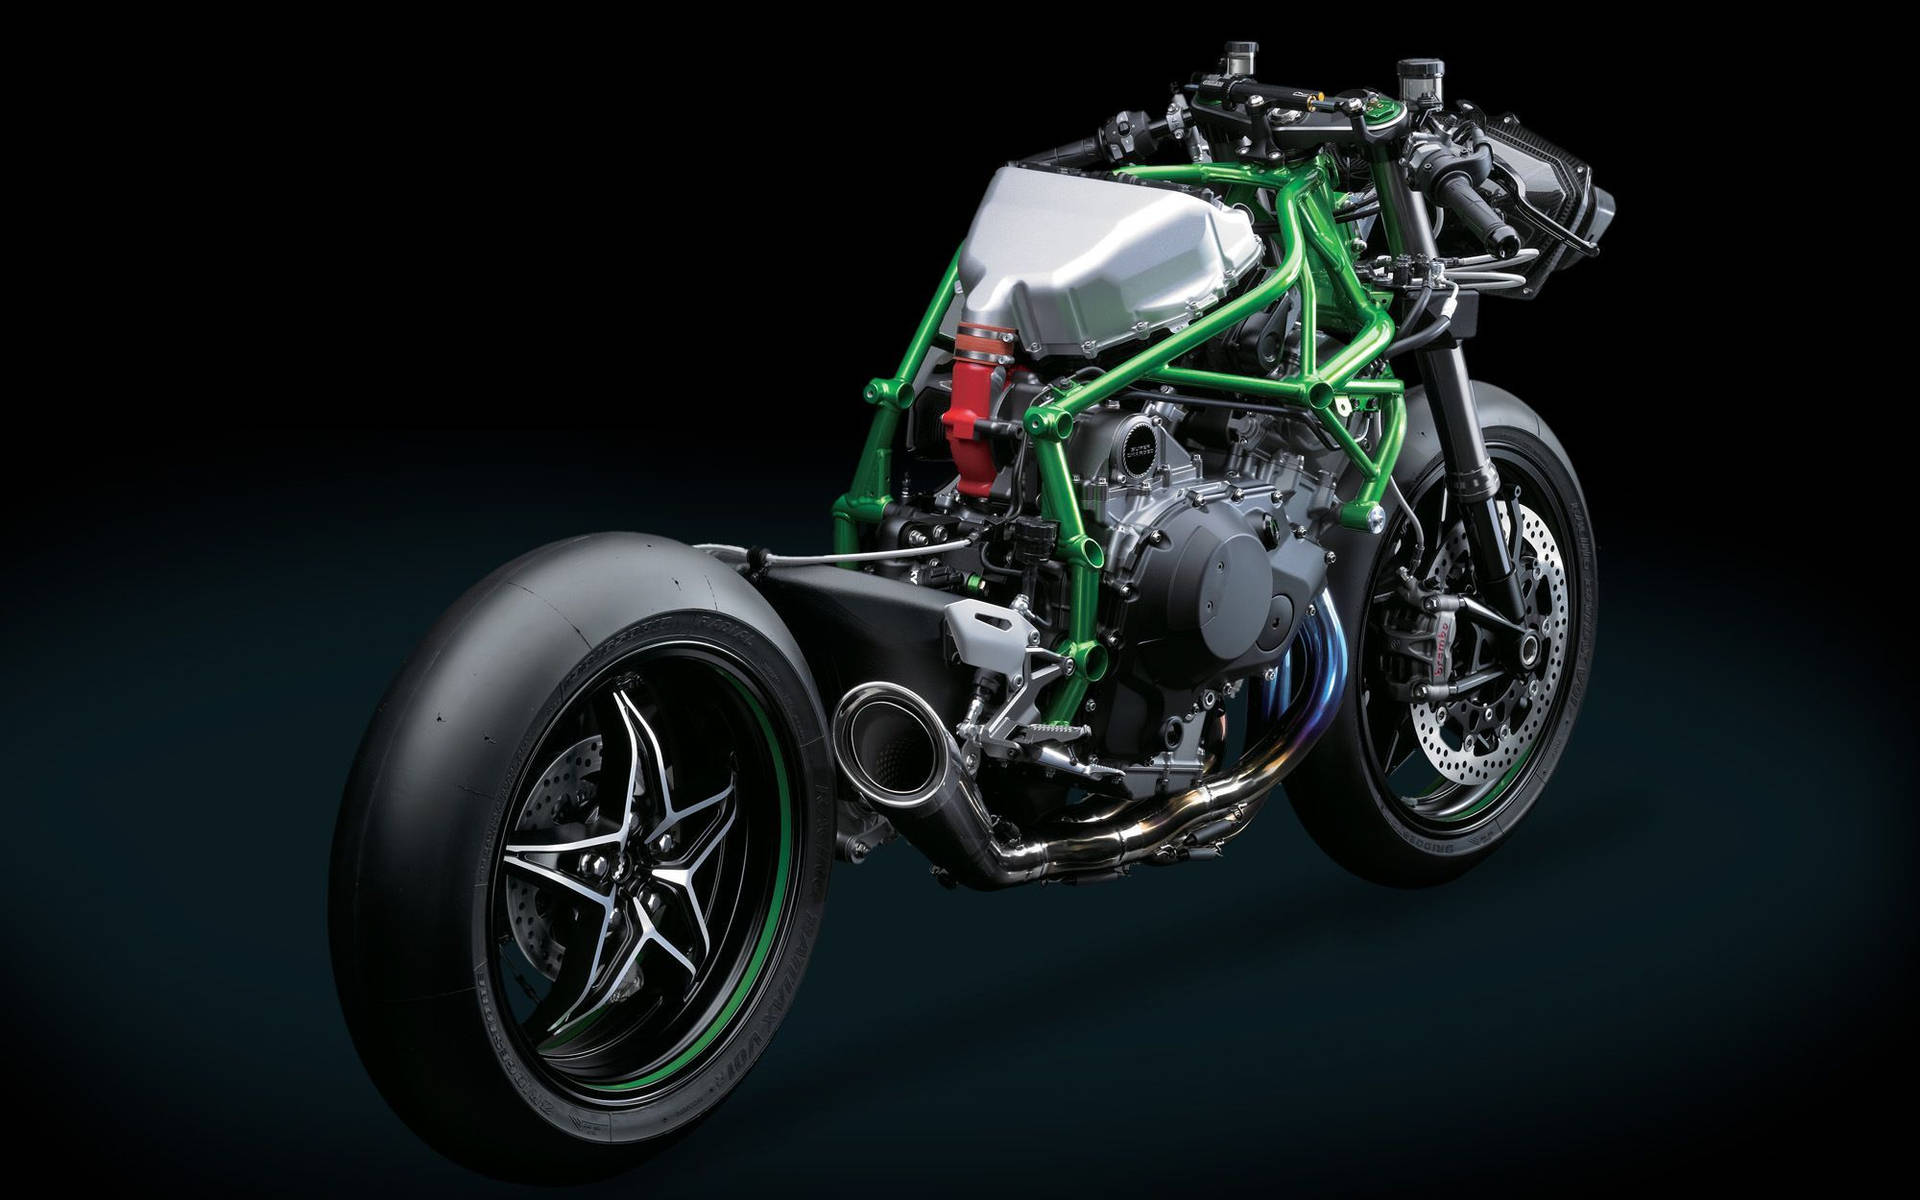 Kawasaki Unveils The Ninja H2r Background